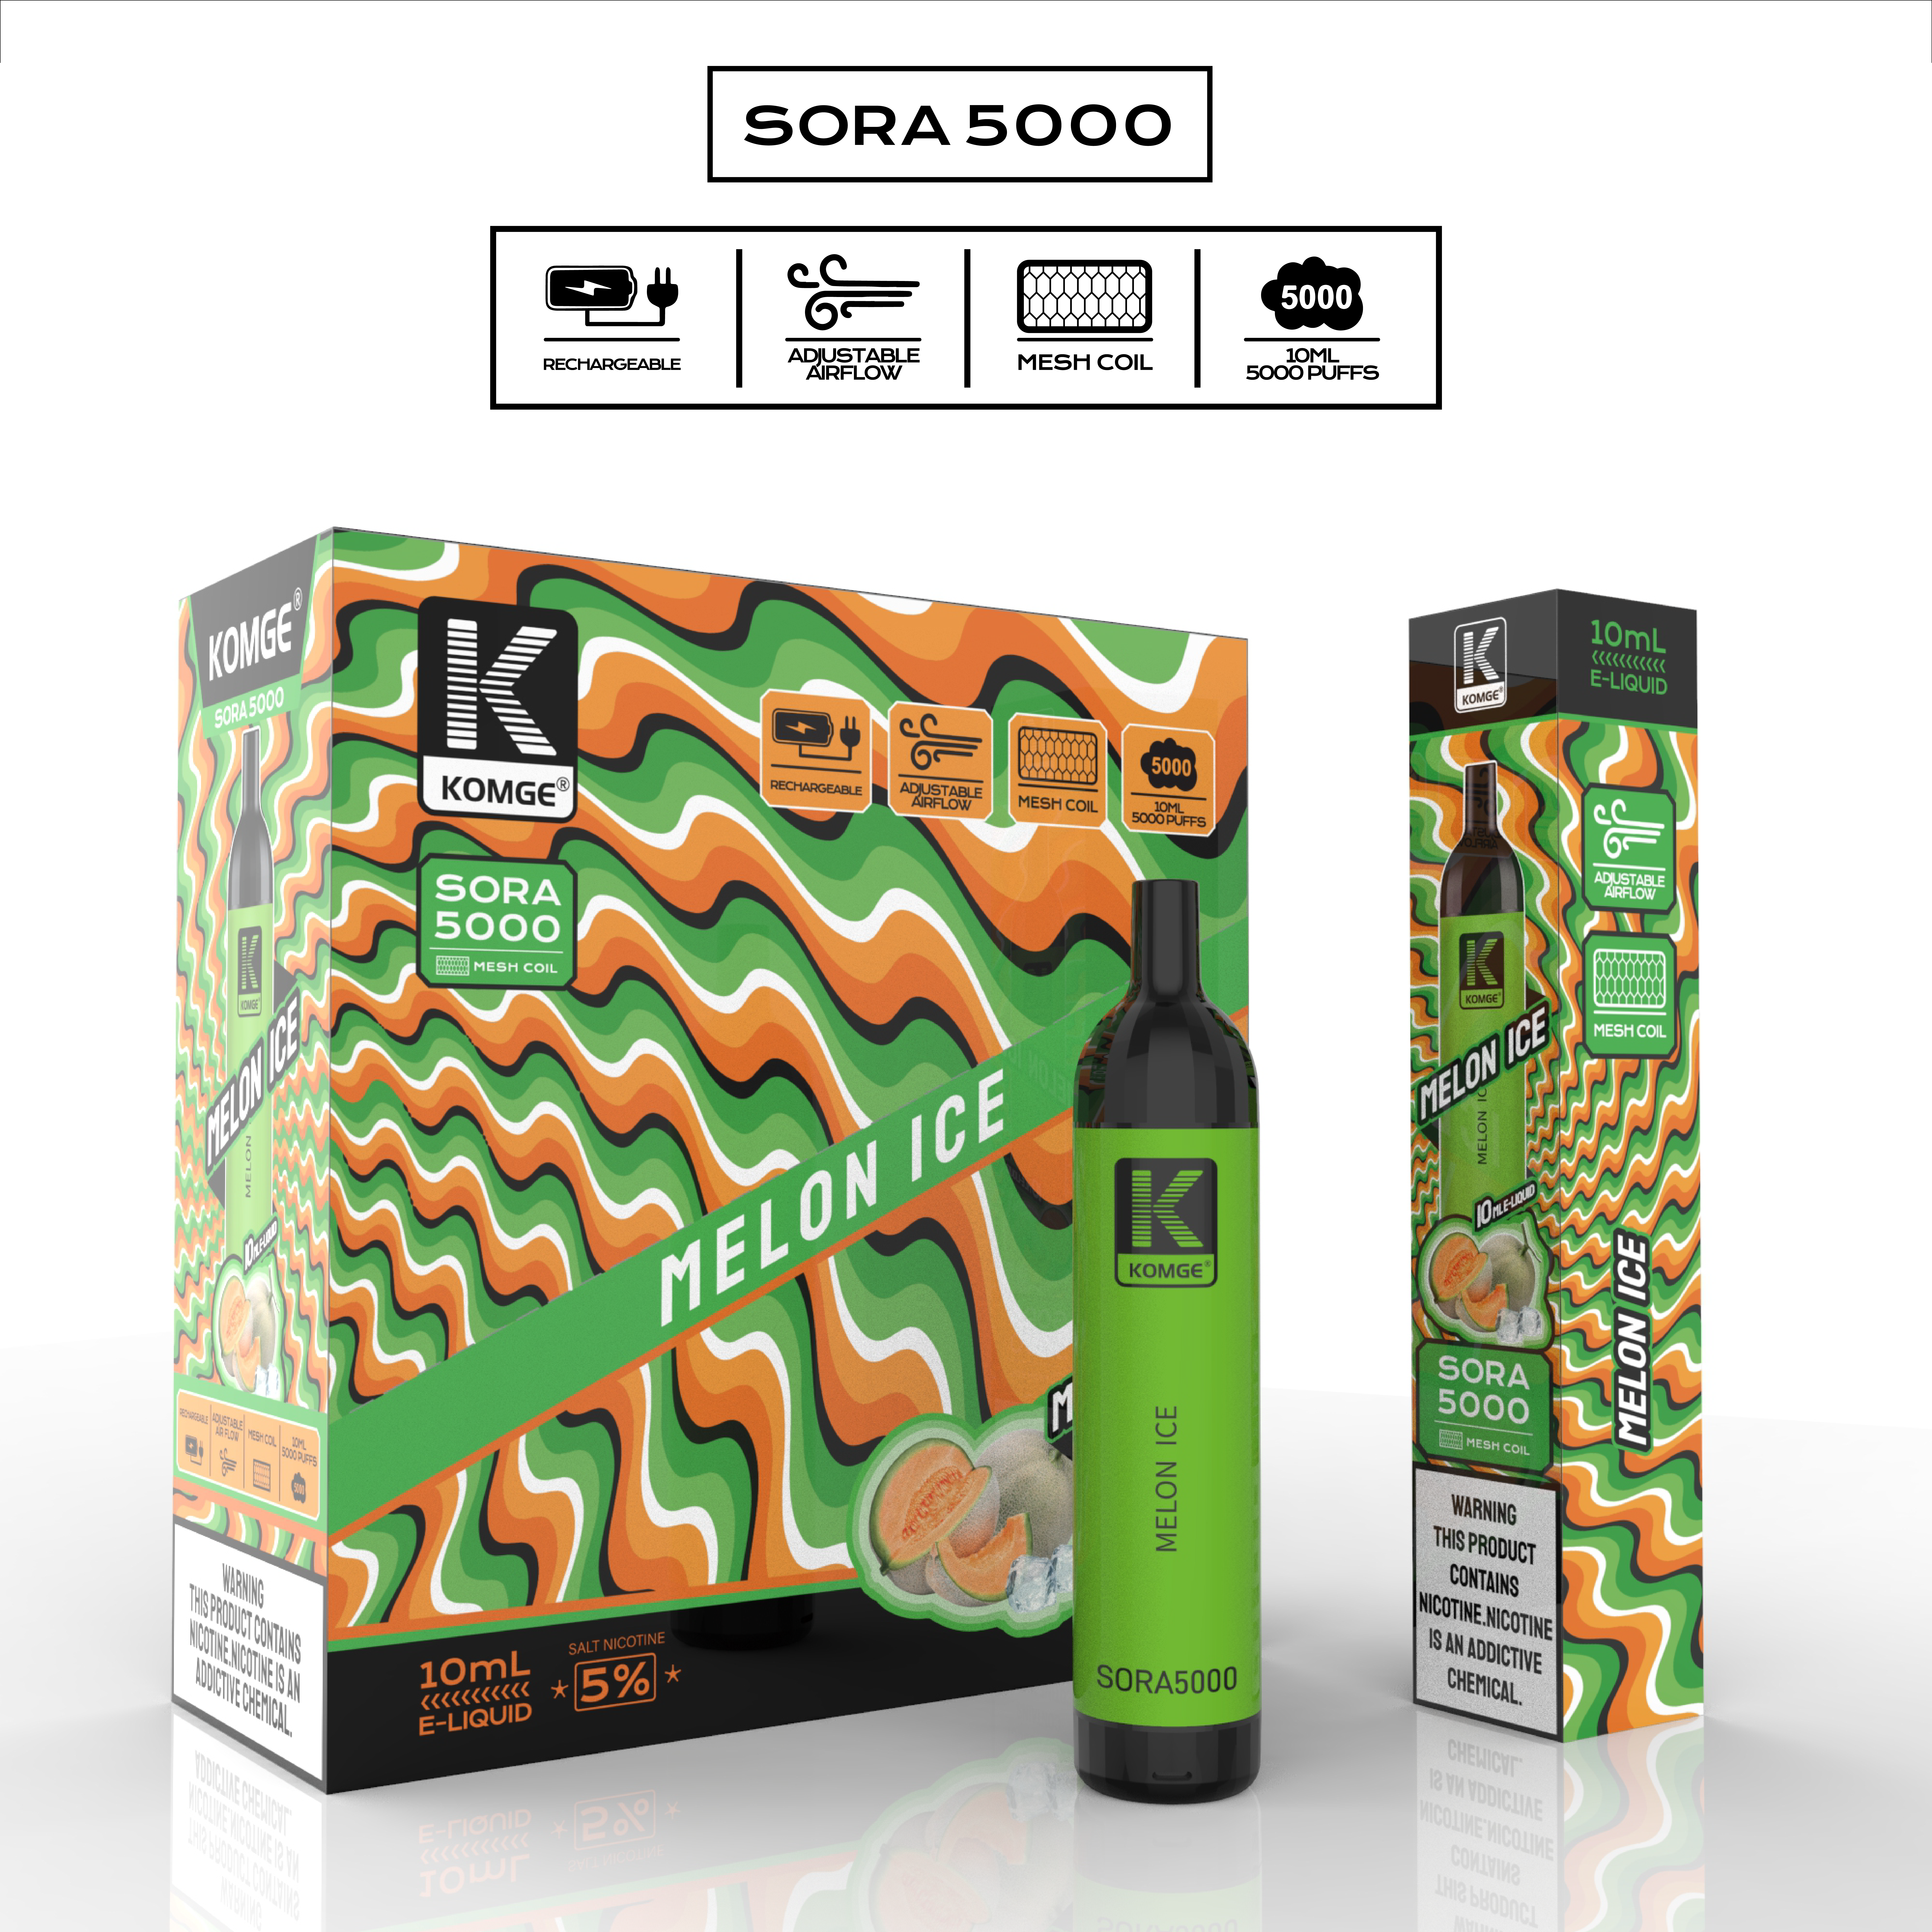 SORA 5000-Melon ice